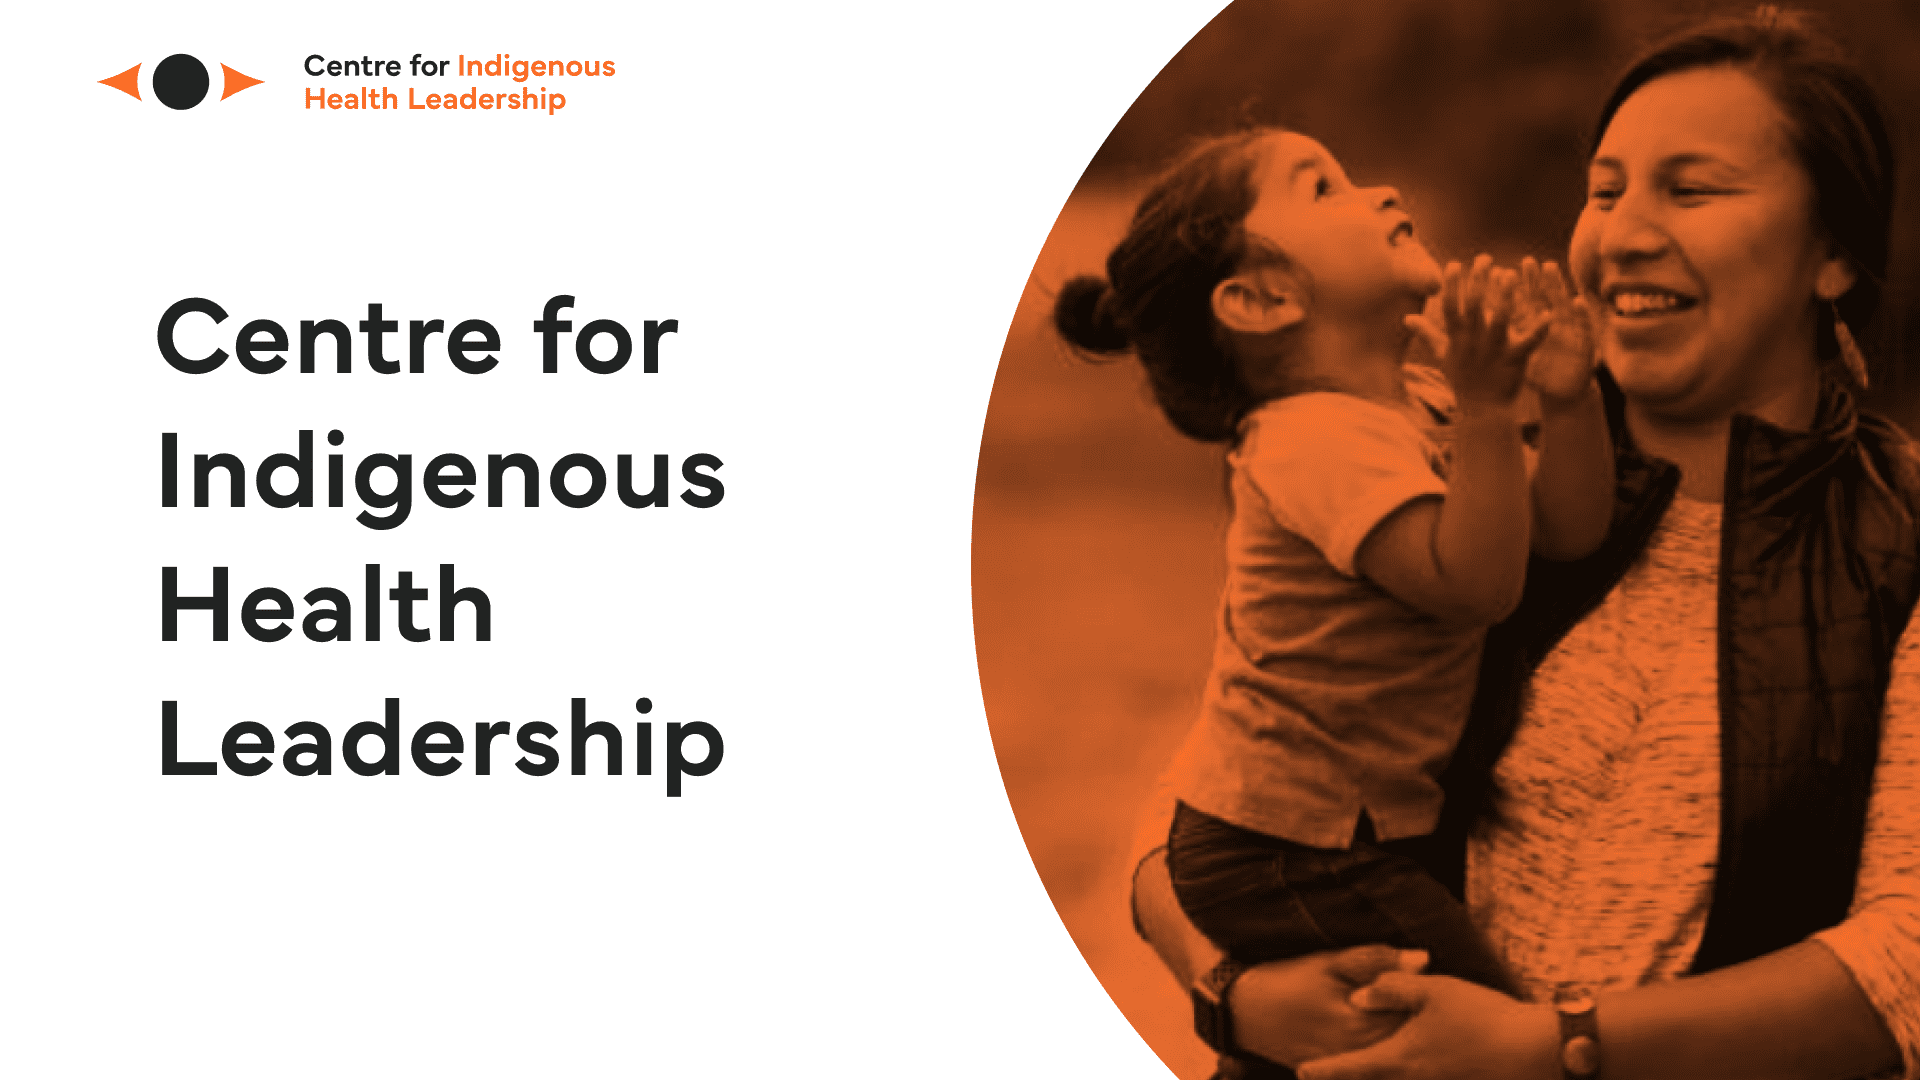 Center for Indigenous Health Leadership